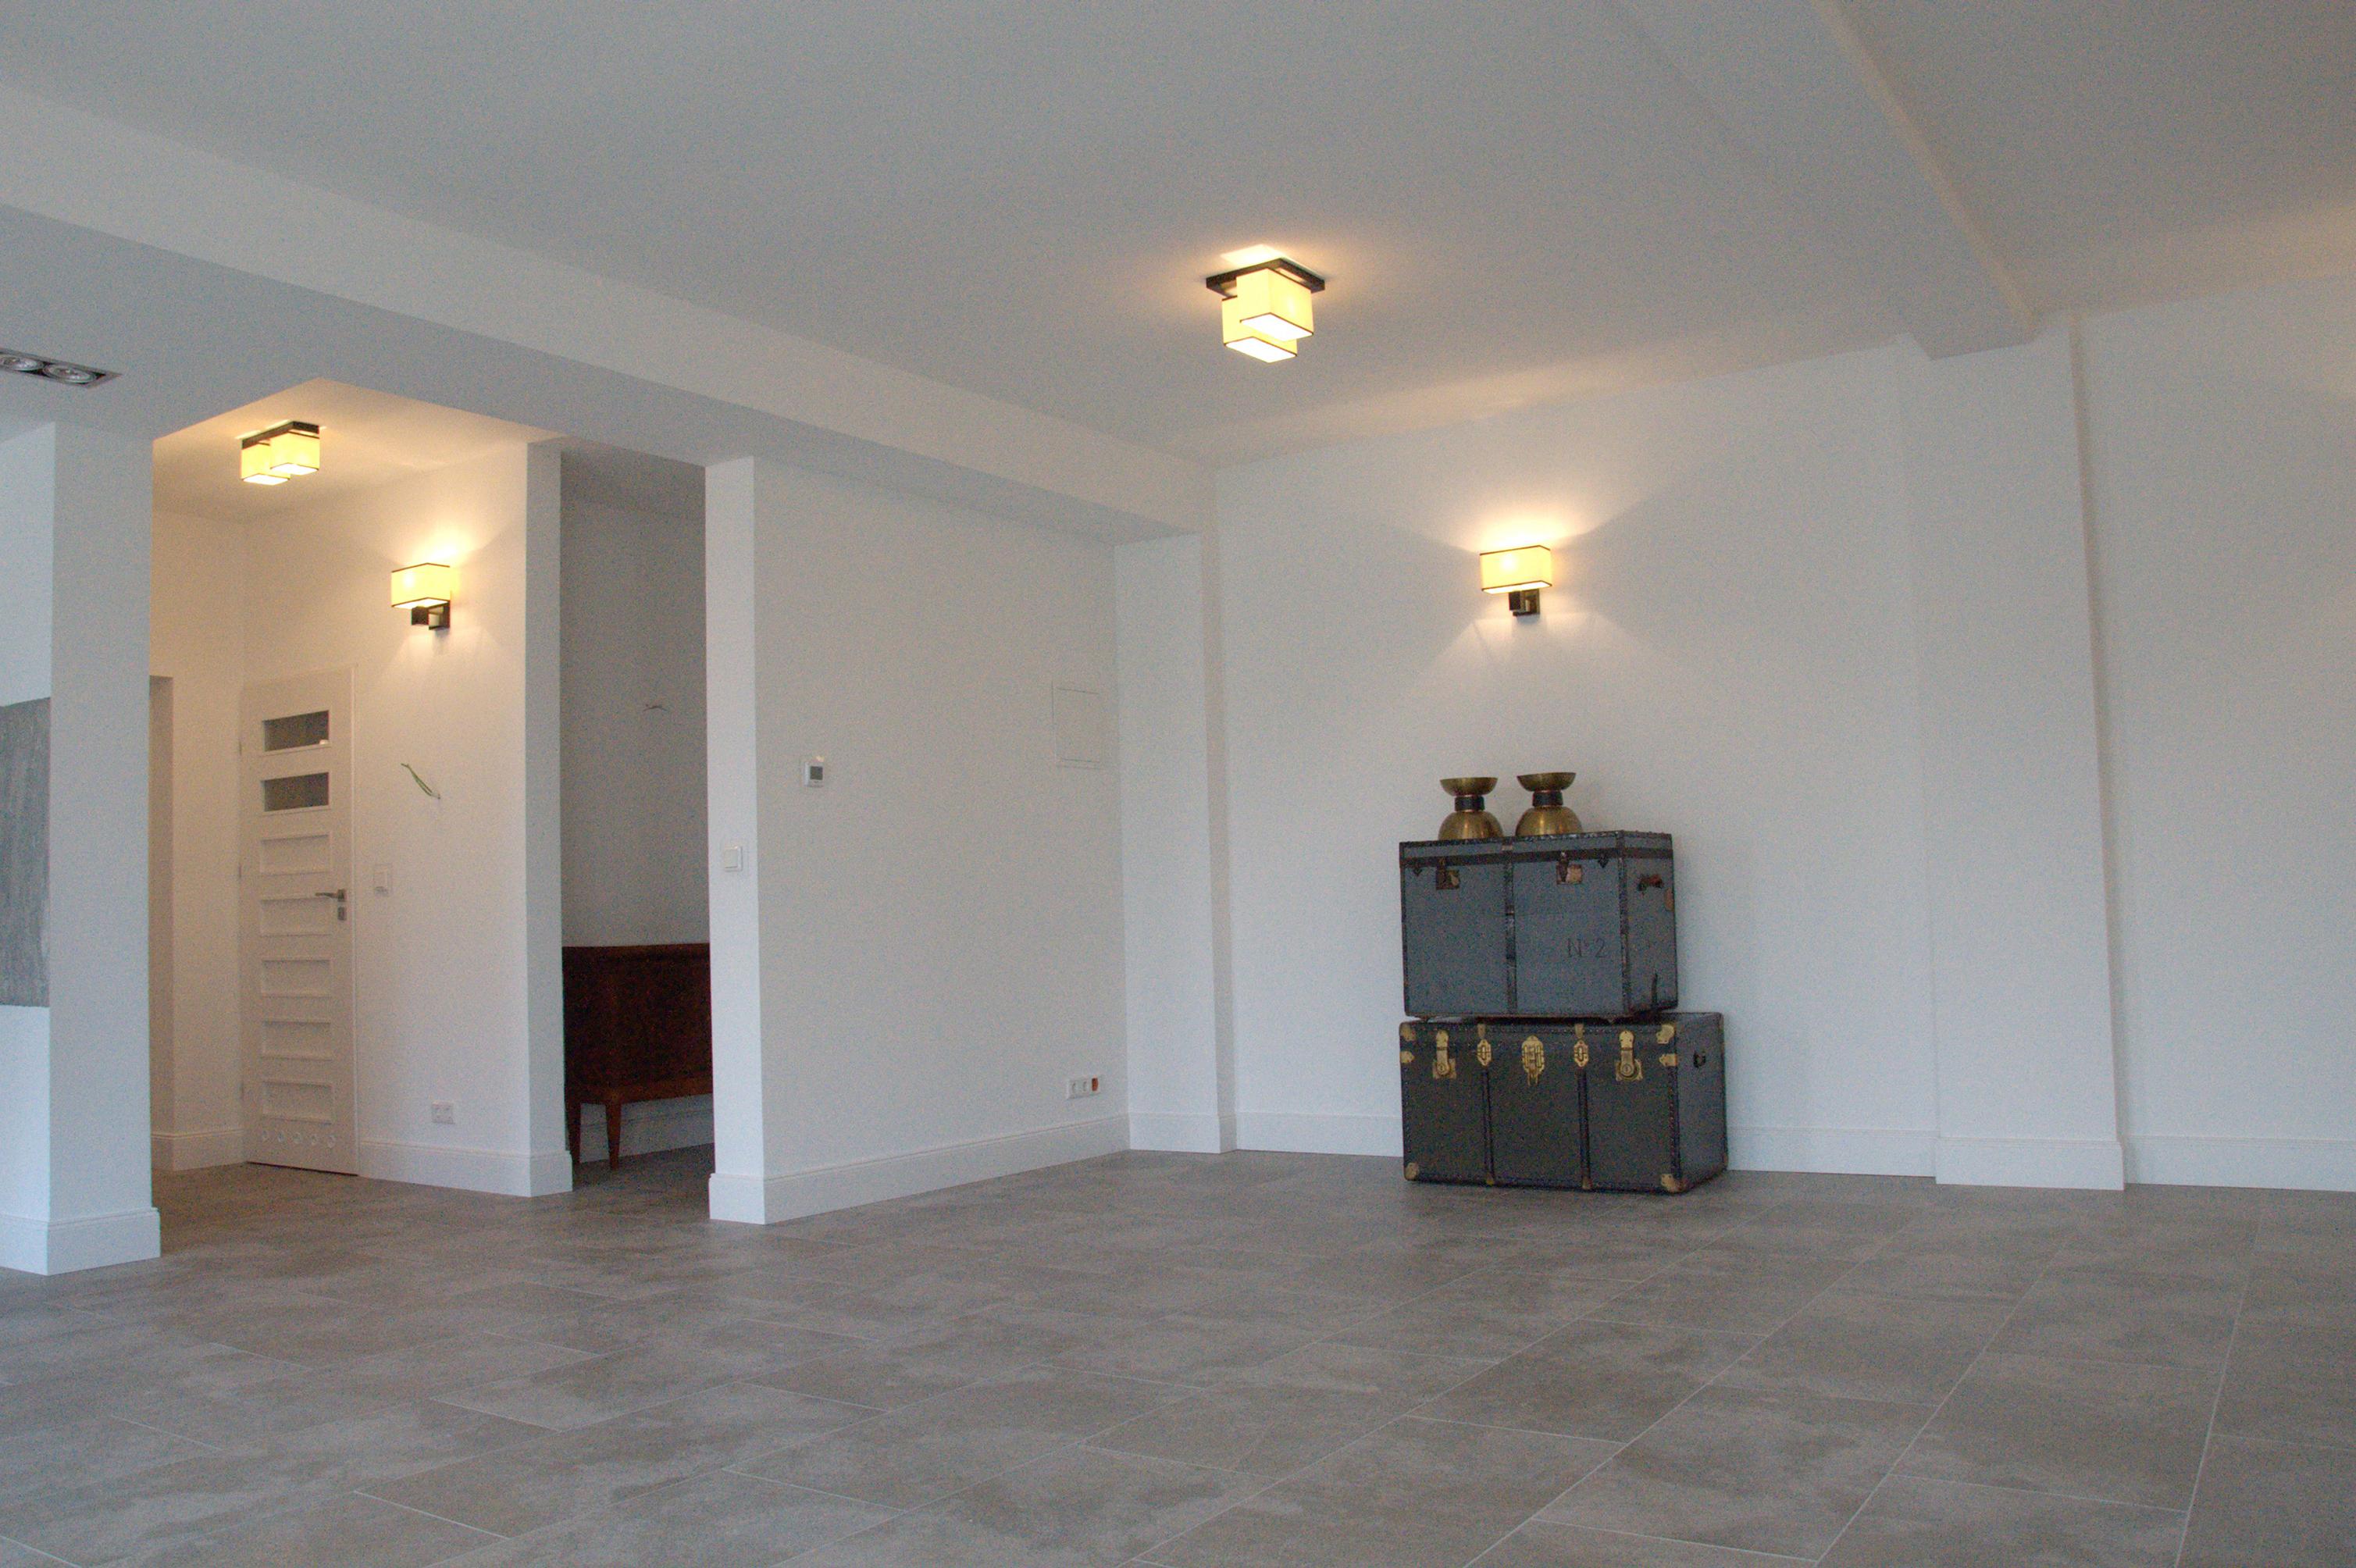 Eingang Wohnzimmer Kamin im Wohlfühl Fabrik Loft 210qm zu mieten #wohnzimmer #loft #lounge #eingang ©Tatjana Adelt